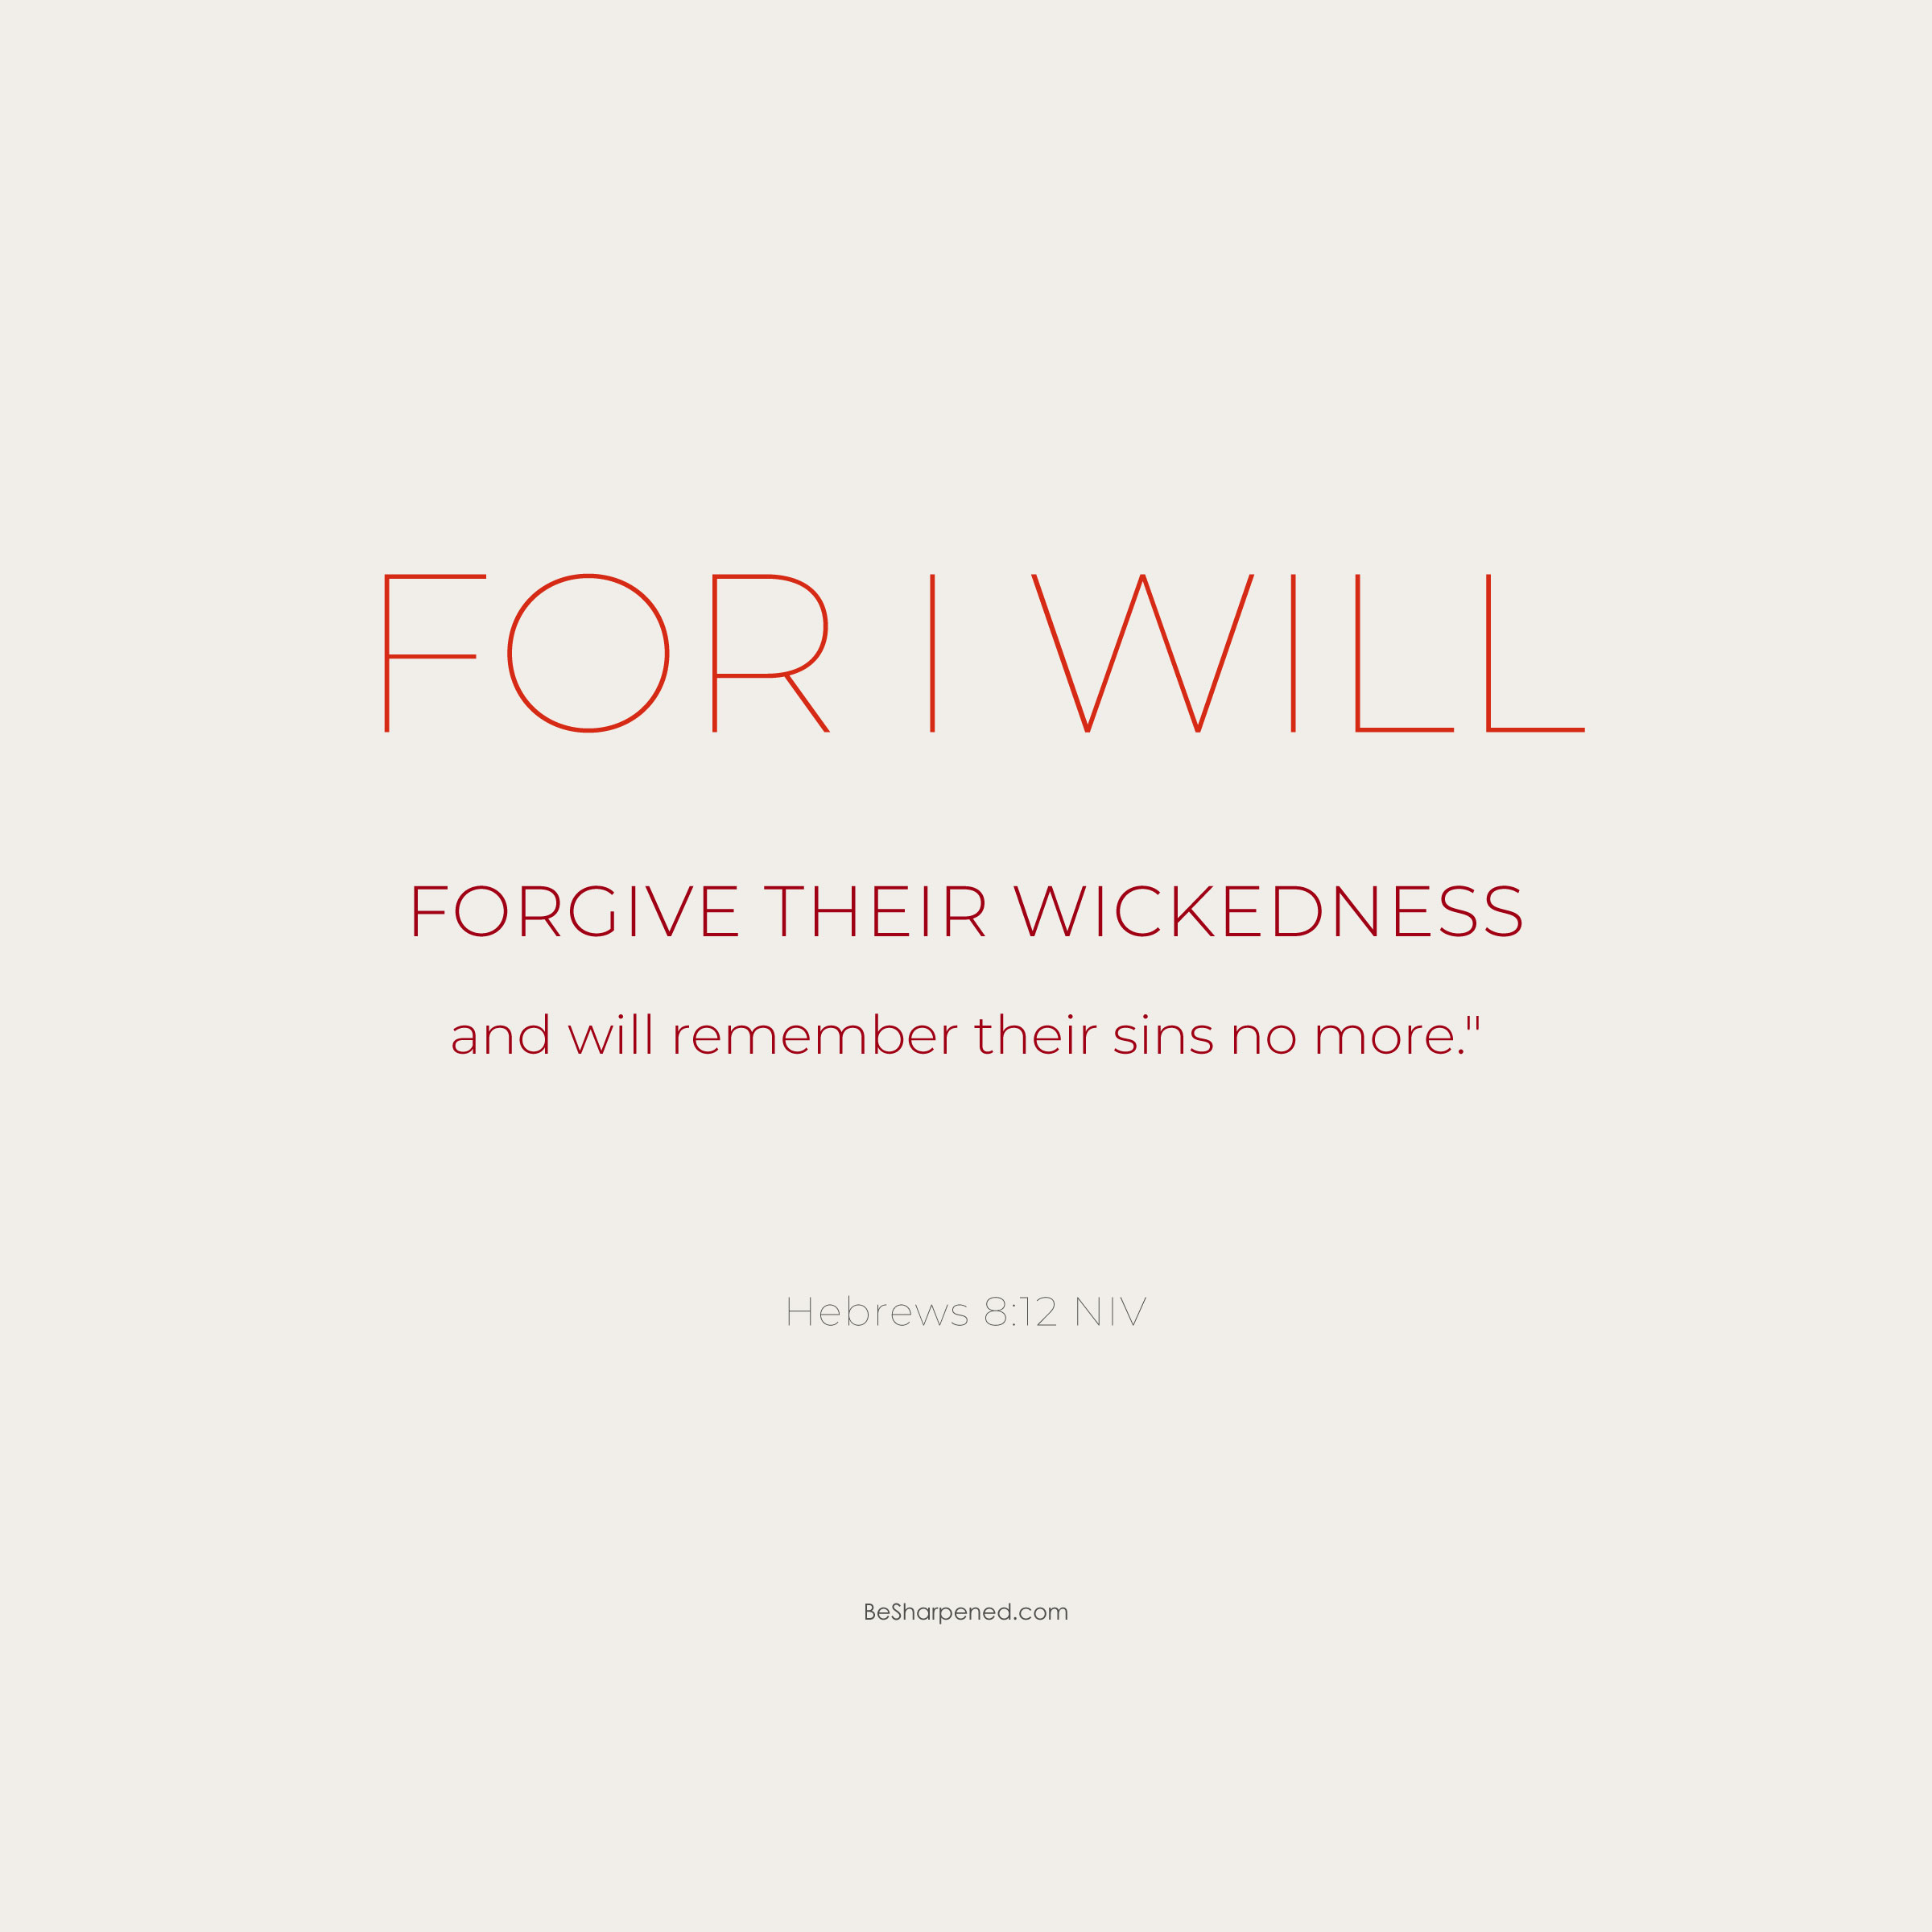 hebrews 8:12 - God Will Forgive Wickedness